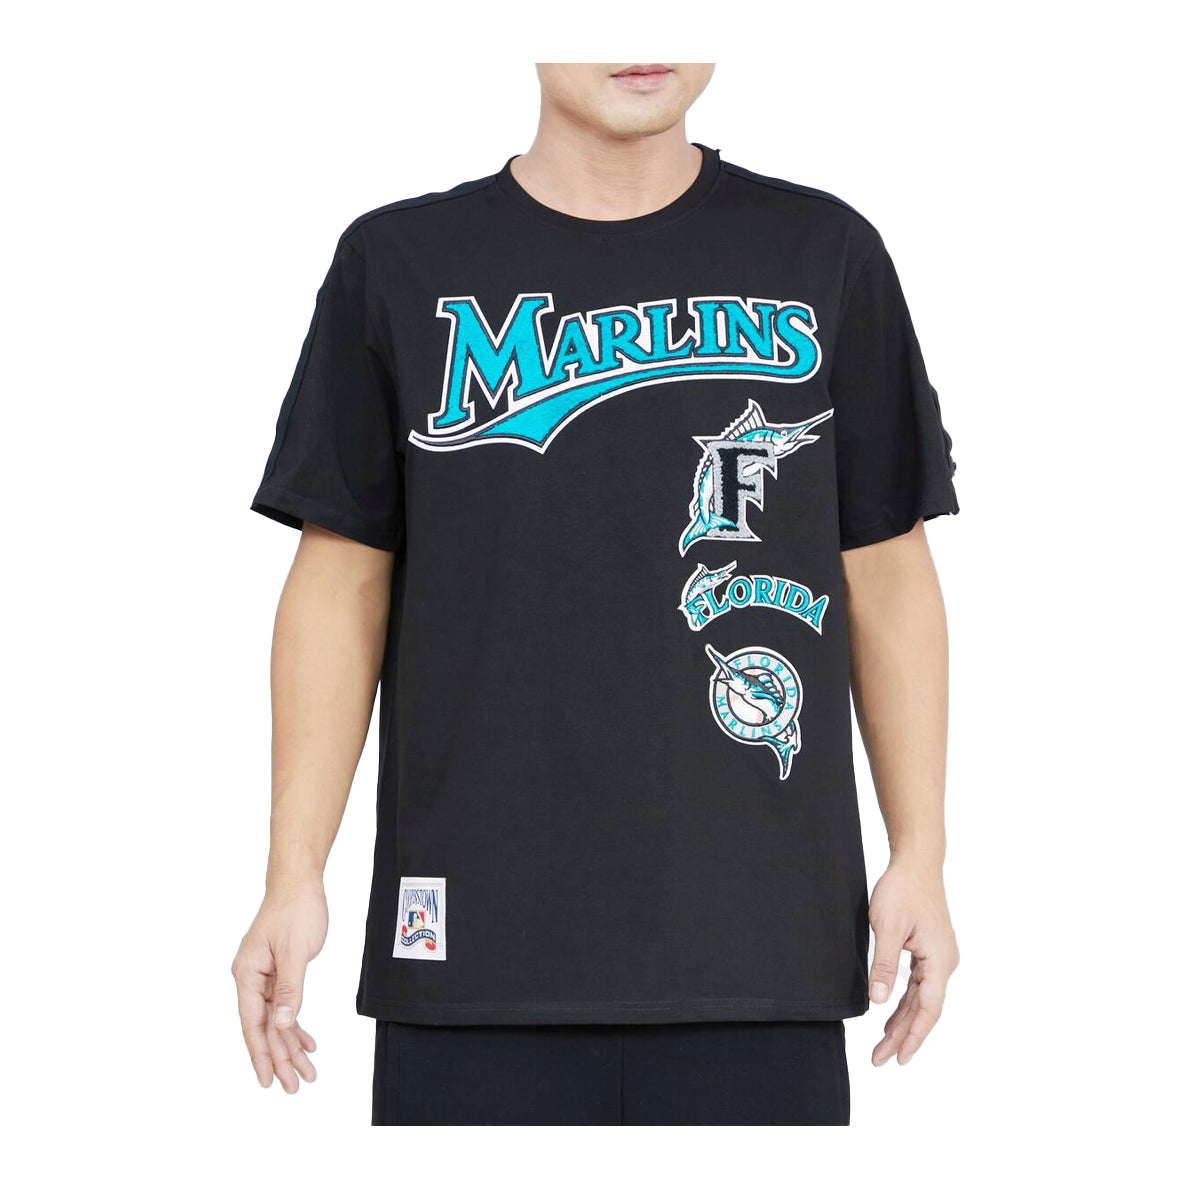 Vintage MLB Florida Marlins Men's Jersey Size M__MADE IN USA.